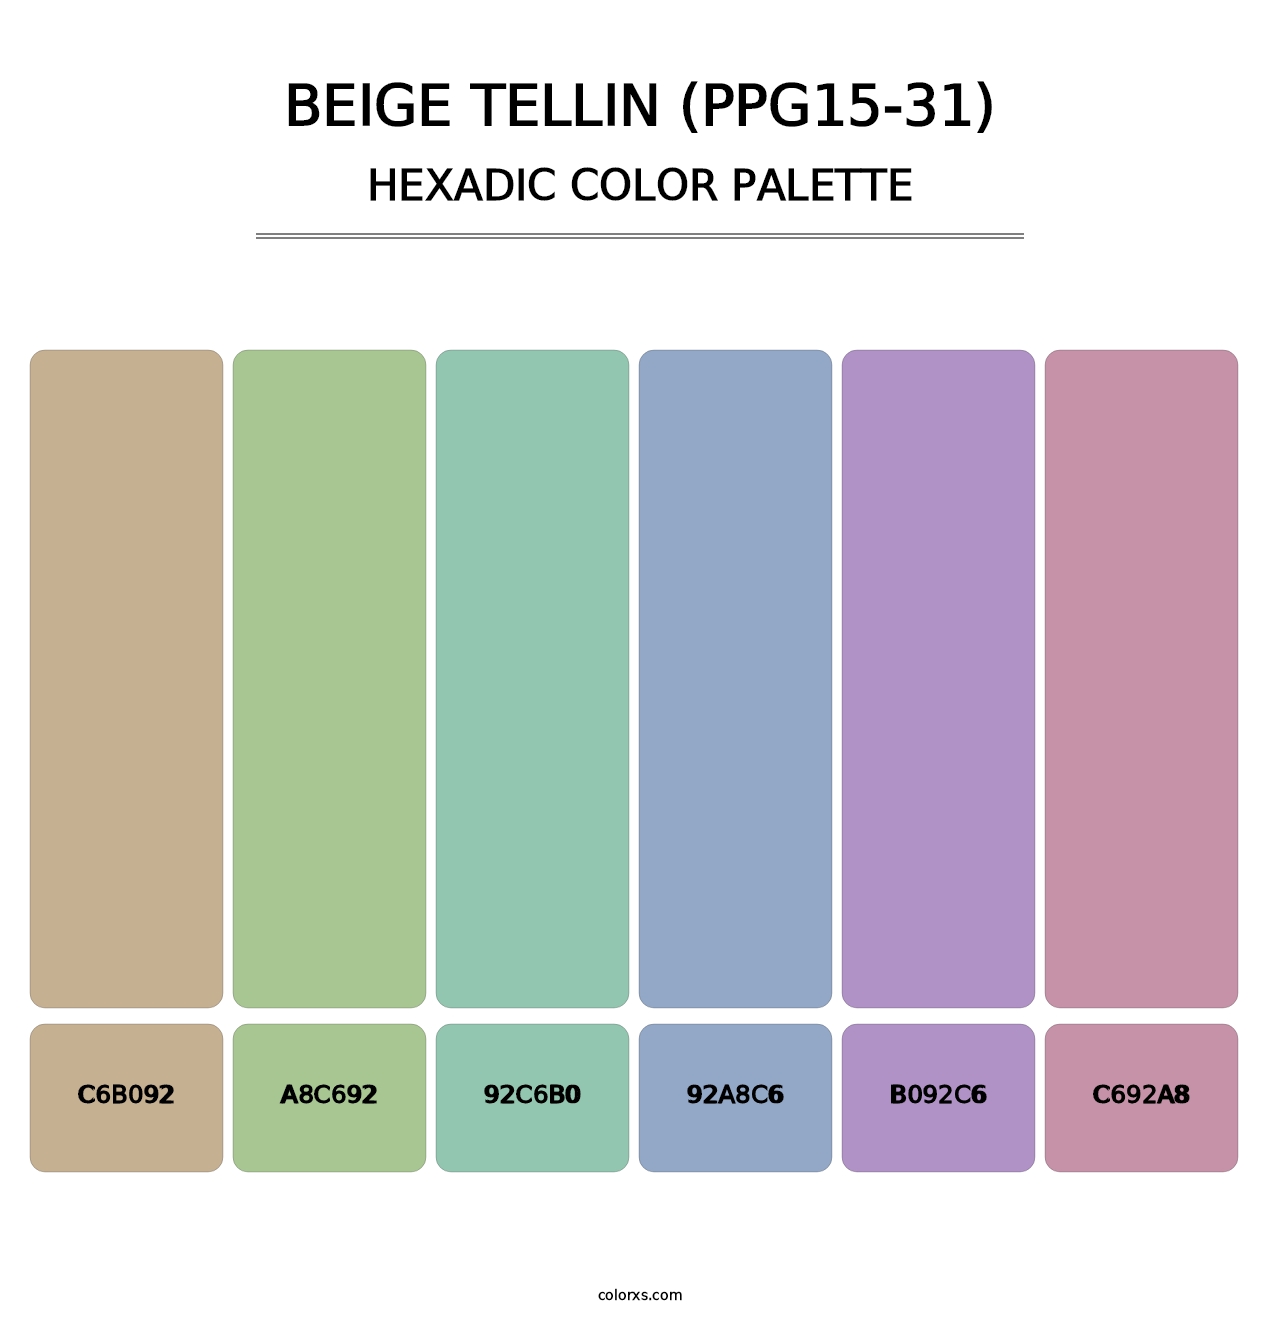 Beige Tellin (PPG15-31) - Hexadic Color Palette